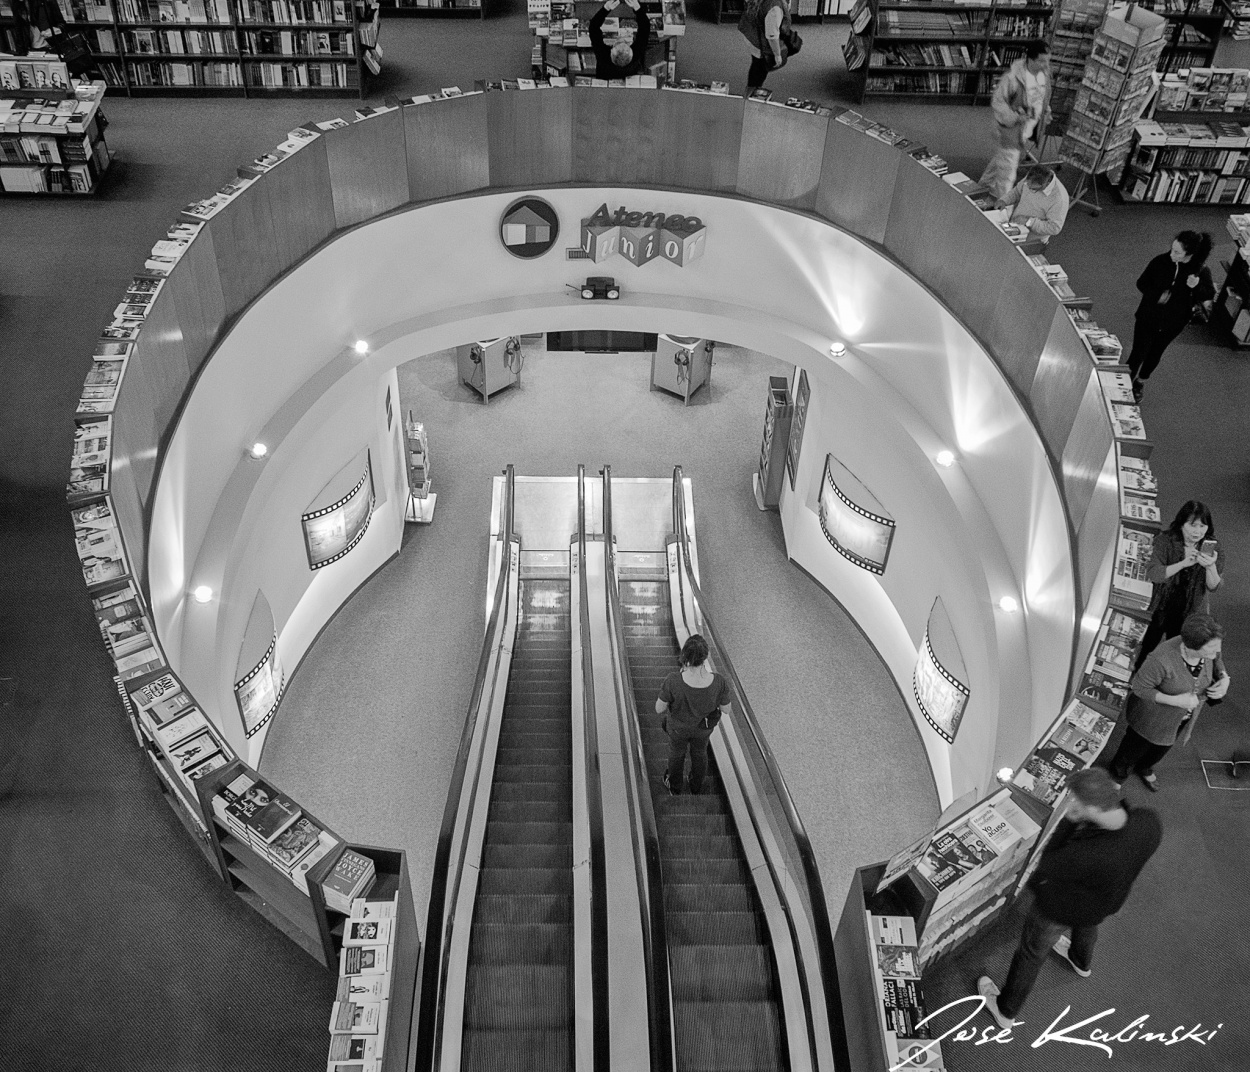 "Libreria E Ateneo 2" de Jose Carlos Kalinski